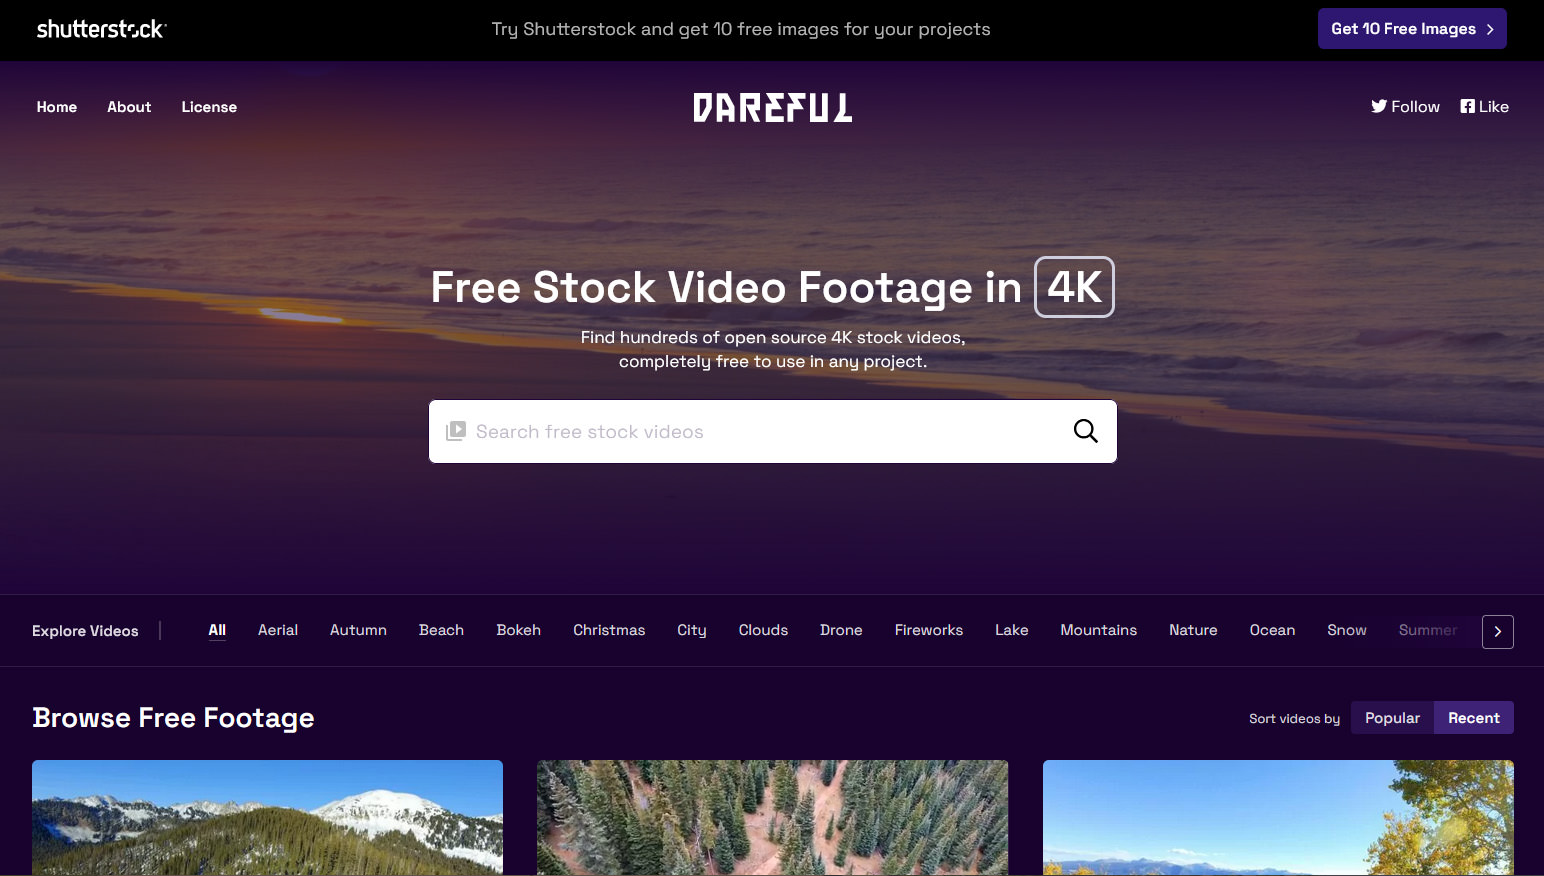 Download Free 4K People Stock Videos & Footage